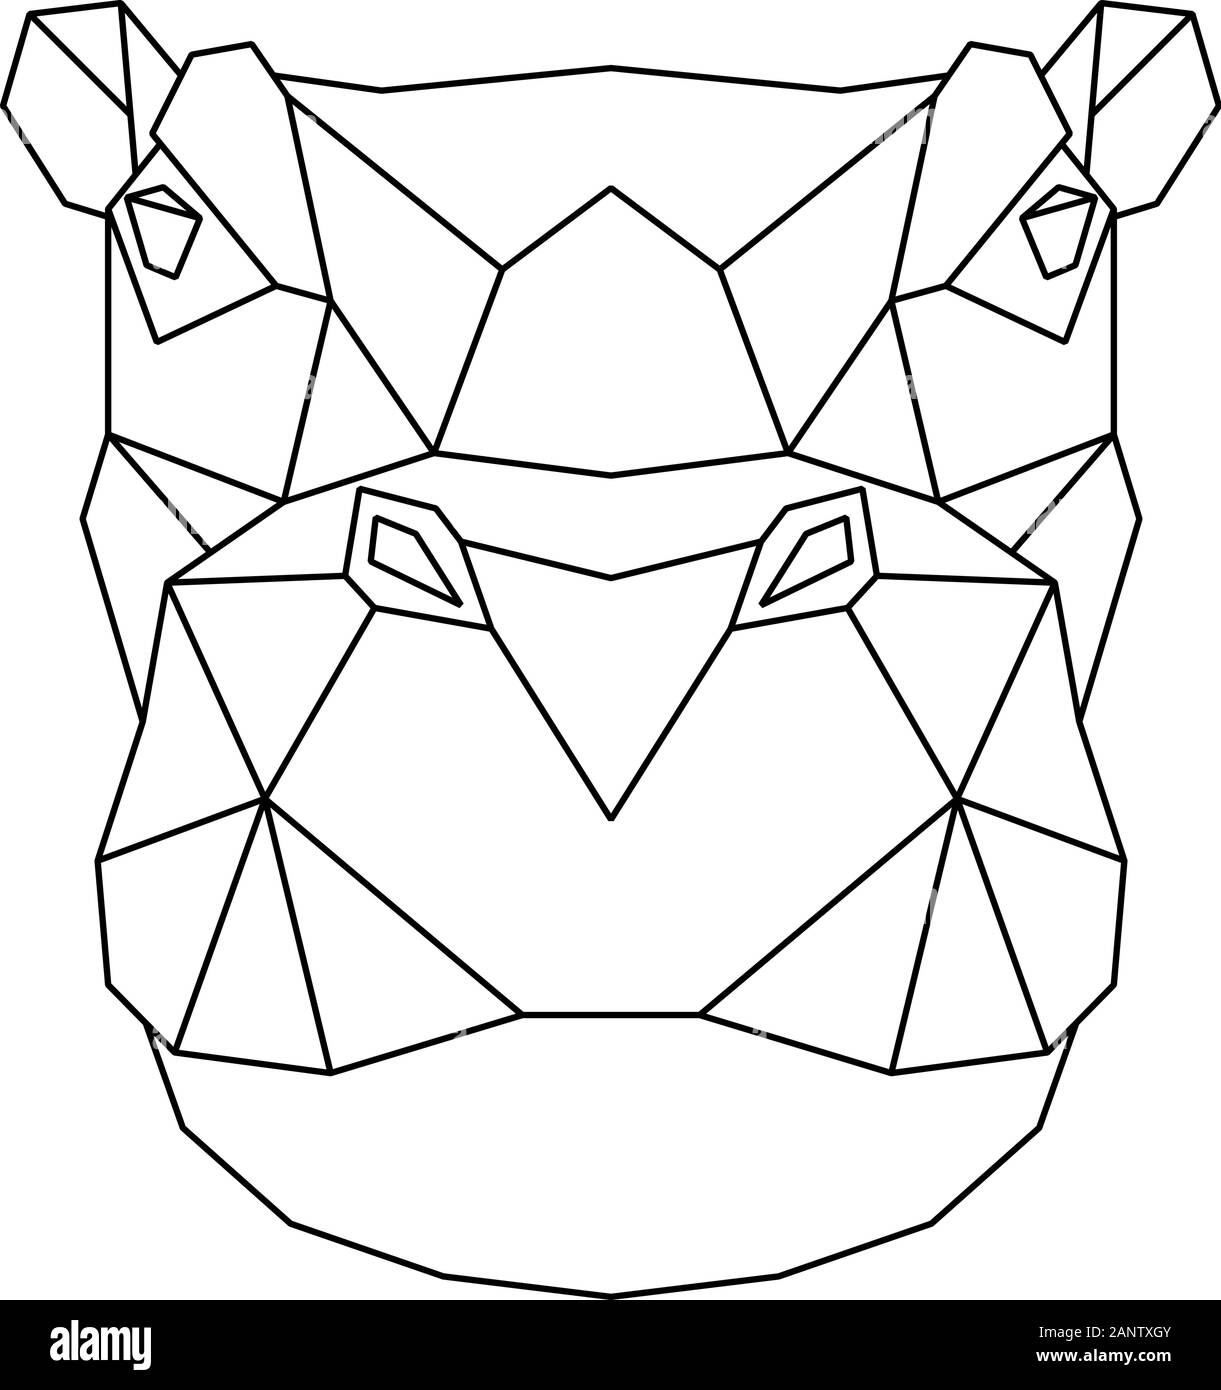 Abstract polygonal head of hippo. Hippopotamus geometric vector illustration. Stock Vector